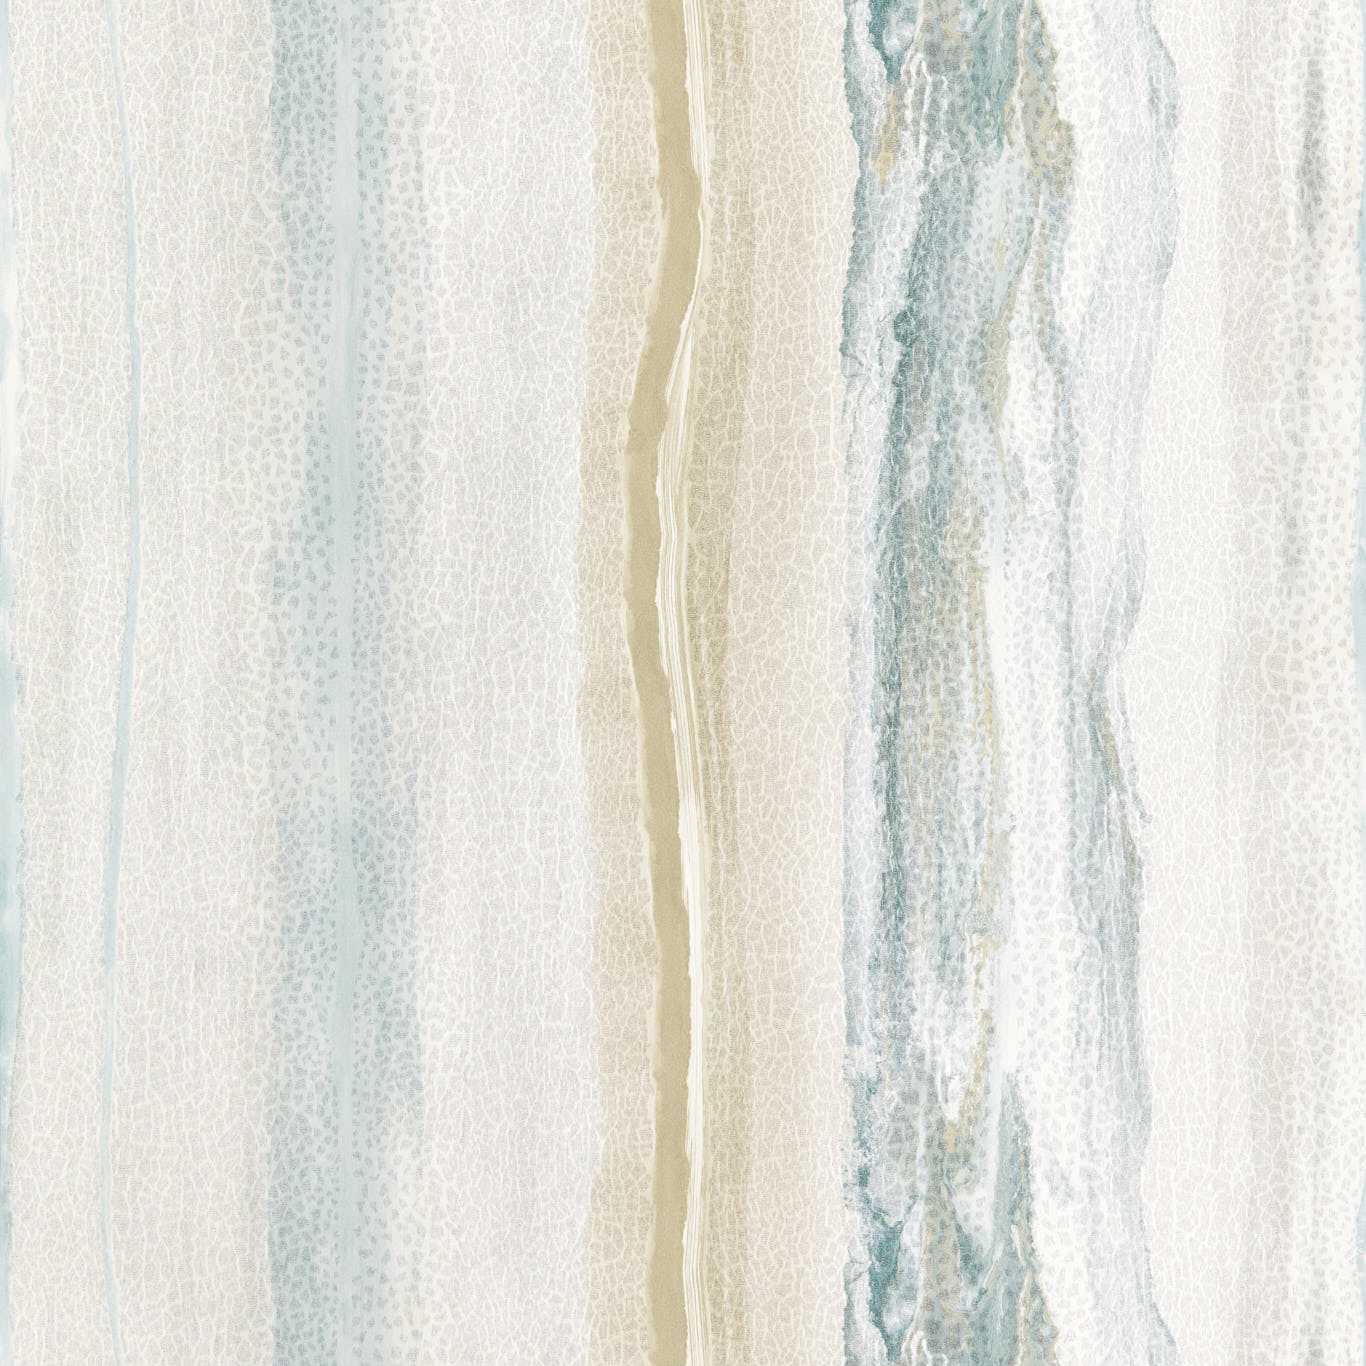 Vitruvius Pumice/Sandstone Wallpaper by HAR